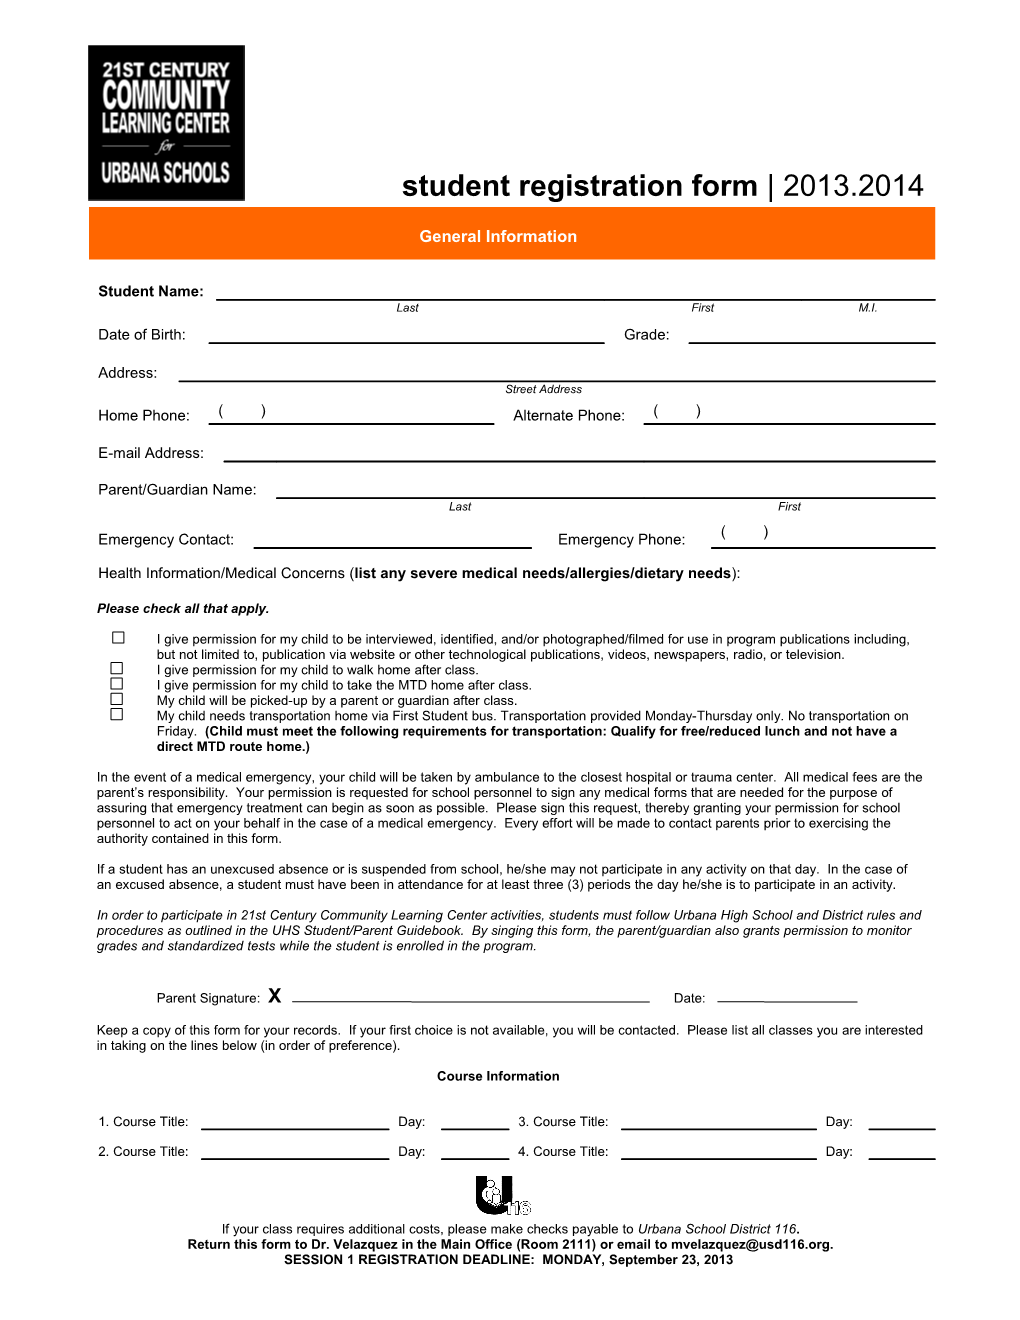 SPLASH Registration Form October 17Th to November 10Th